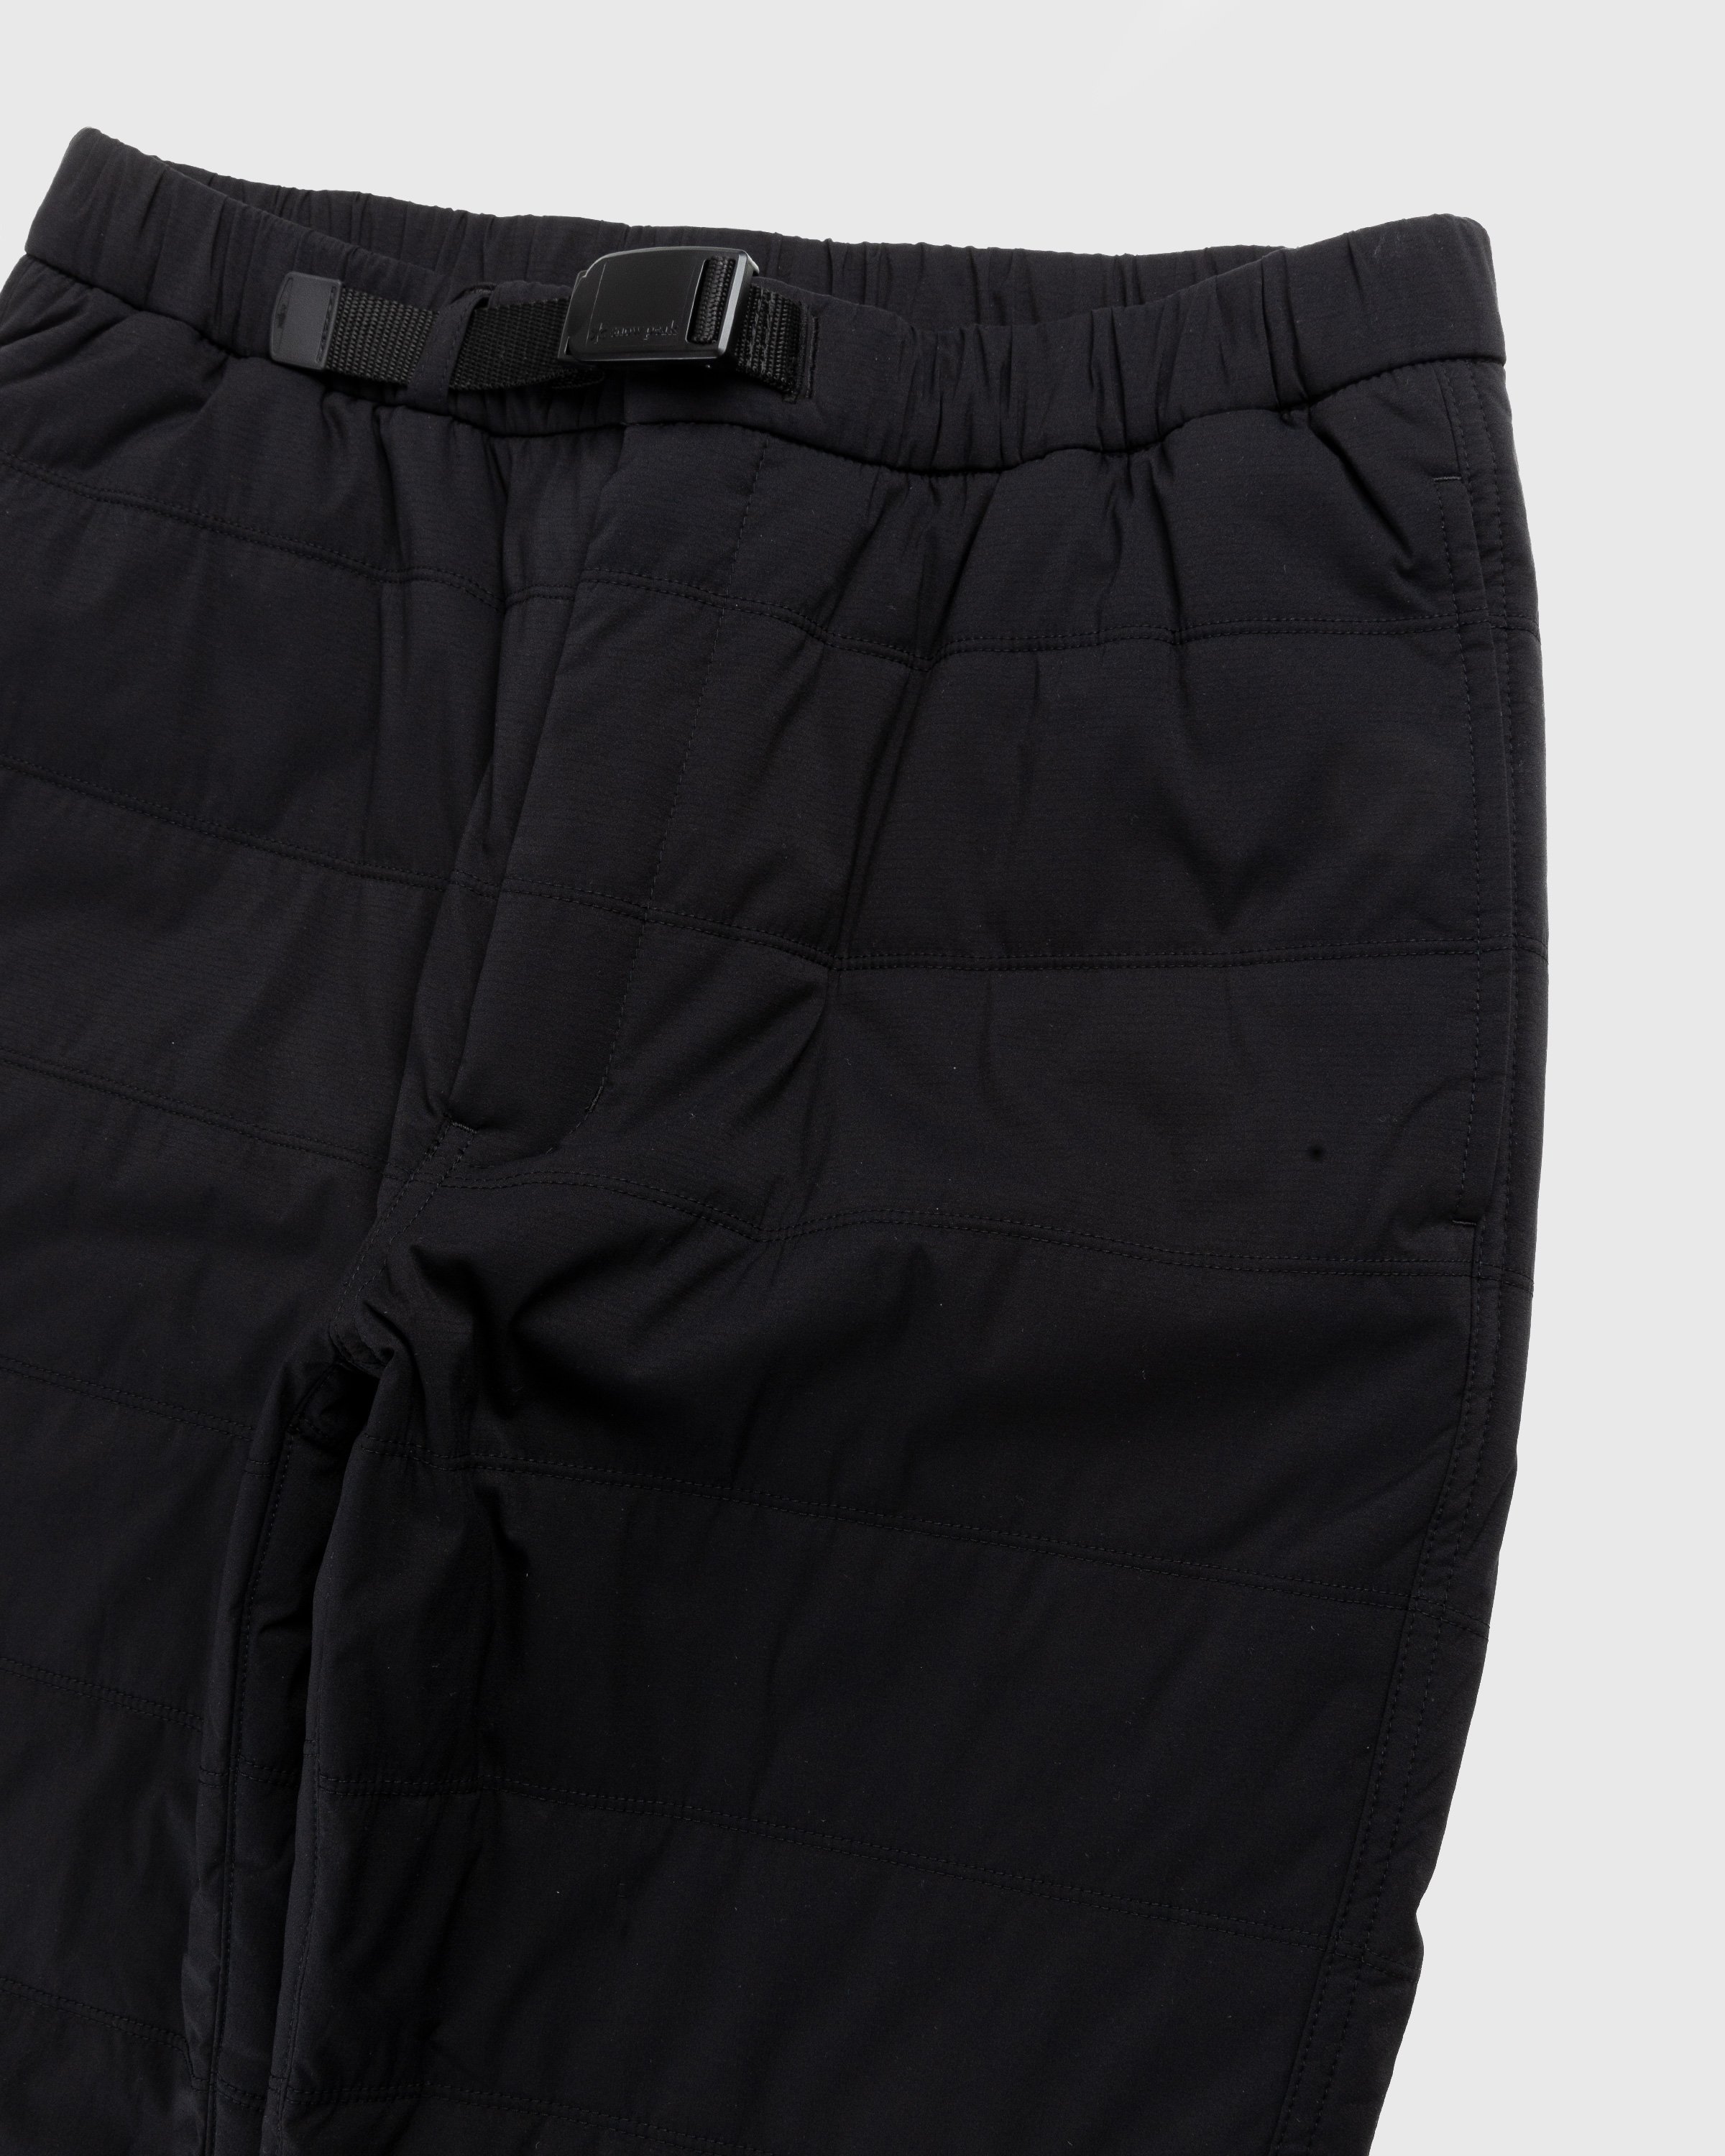 Snow Peak - Flexible Insulated Pants Black - Clothing - Black - Image 4